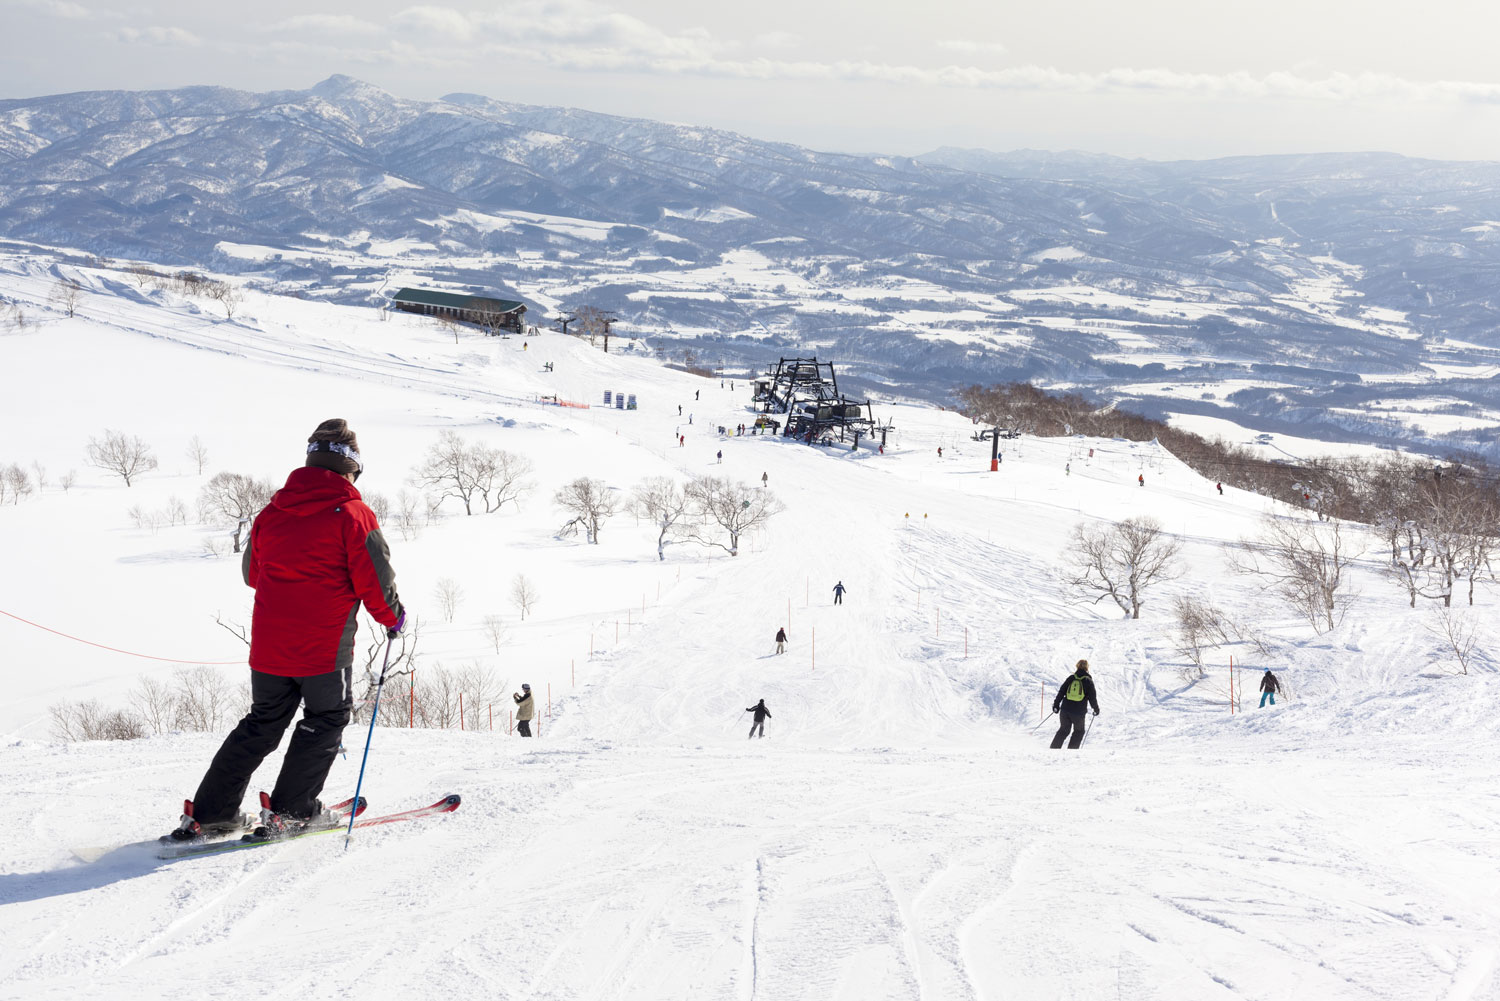 Niseko ski resort in Hokkaido, Japan.